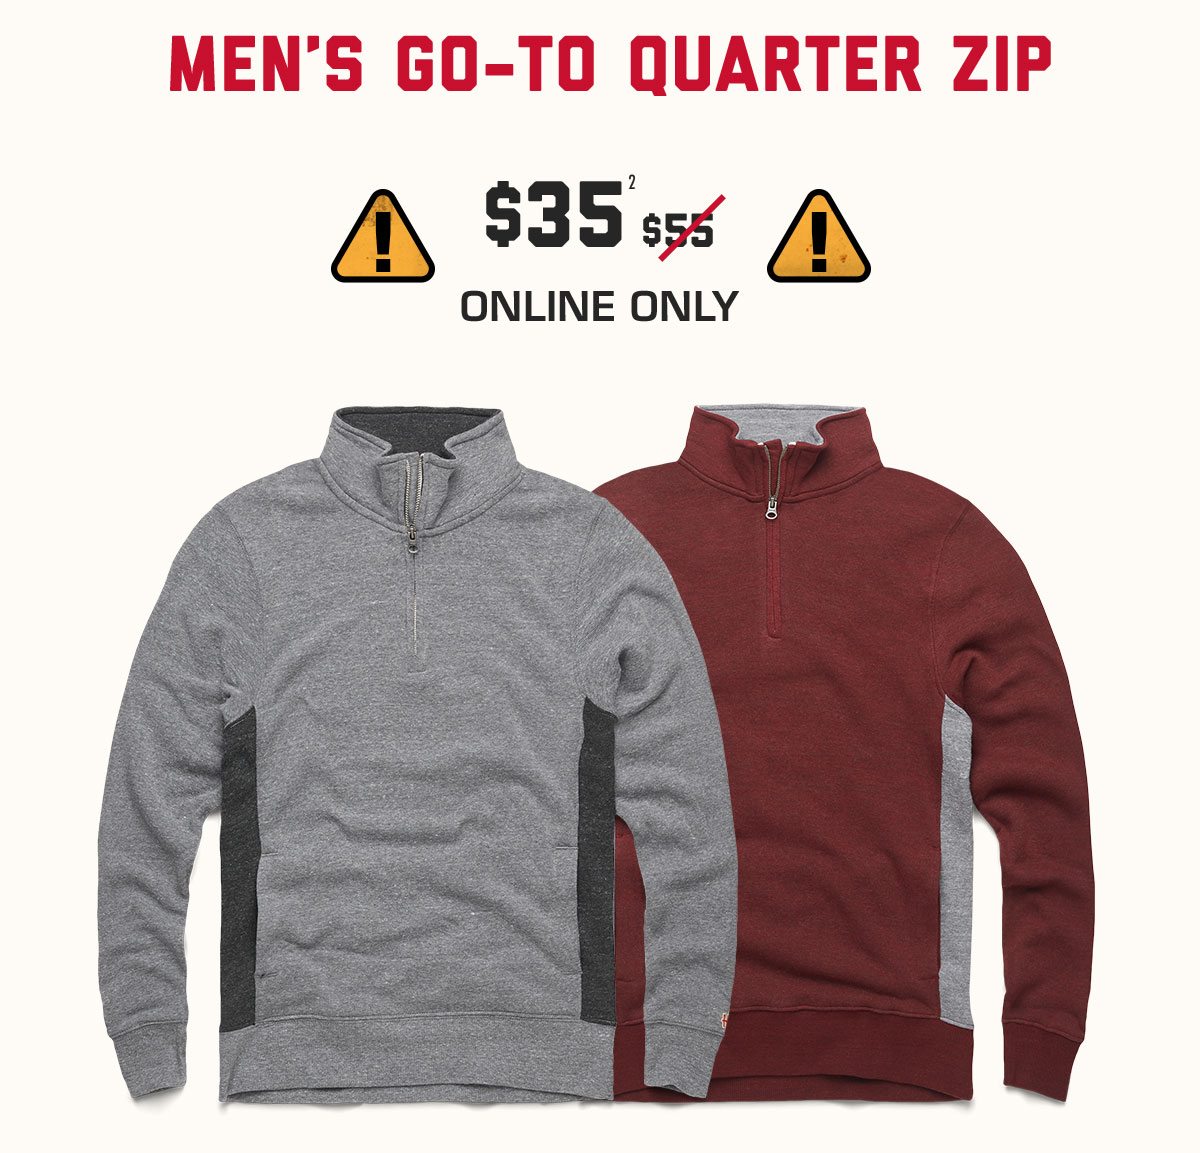 Go-To Quarter Zip, $35* online only.